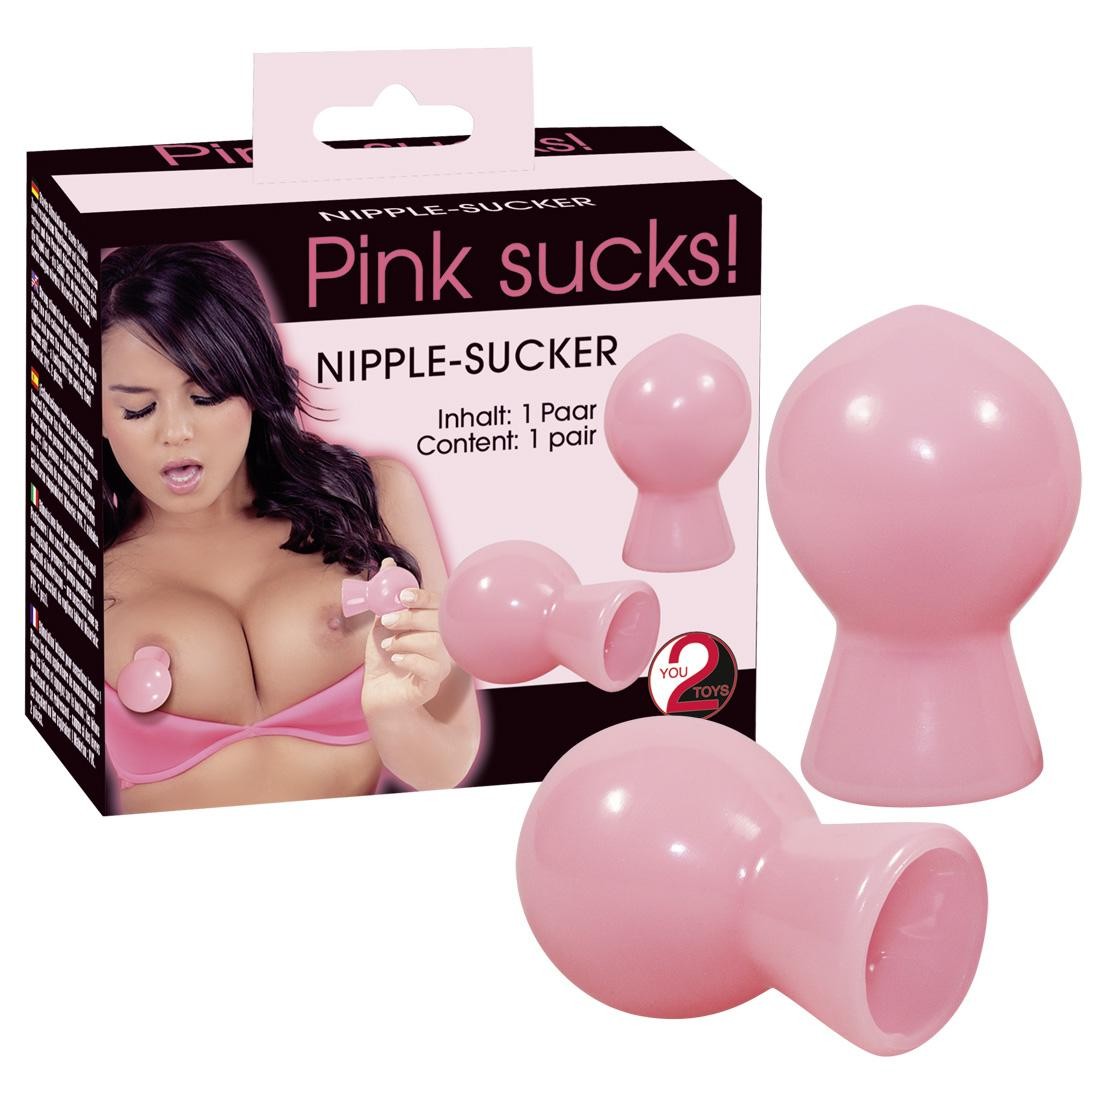  You2Toys  -  Pink  Sucks!  -  Nipple-Sucker 